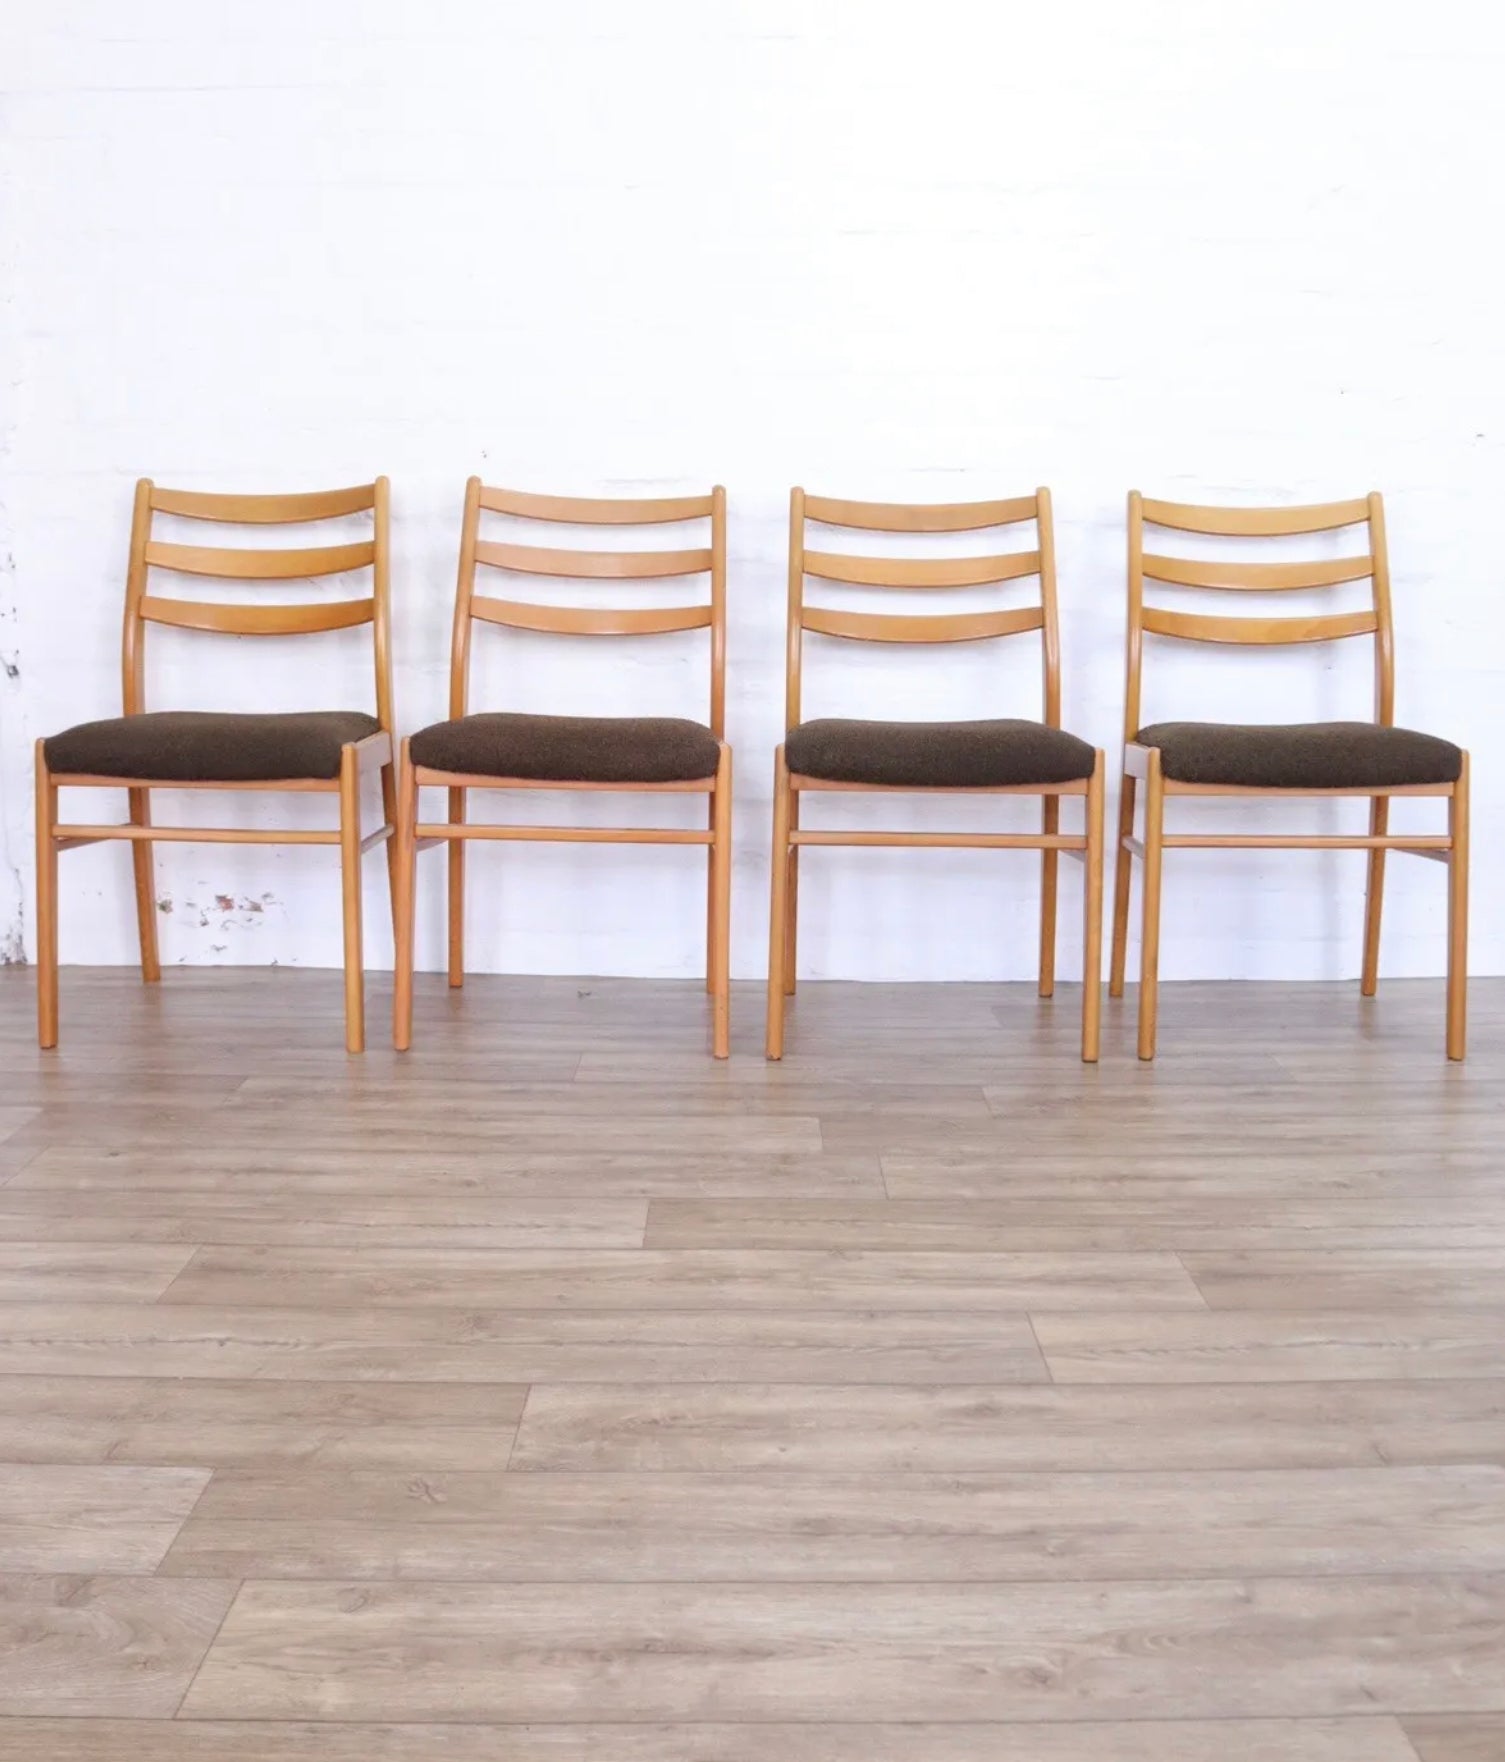 4 x Vintage Beech Danish Style Dining Chairs Mid Century Scandi - teakyfinders